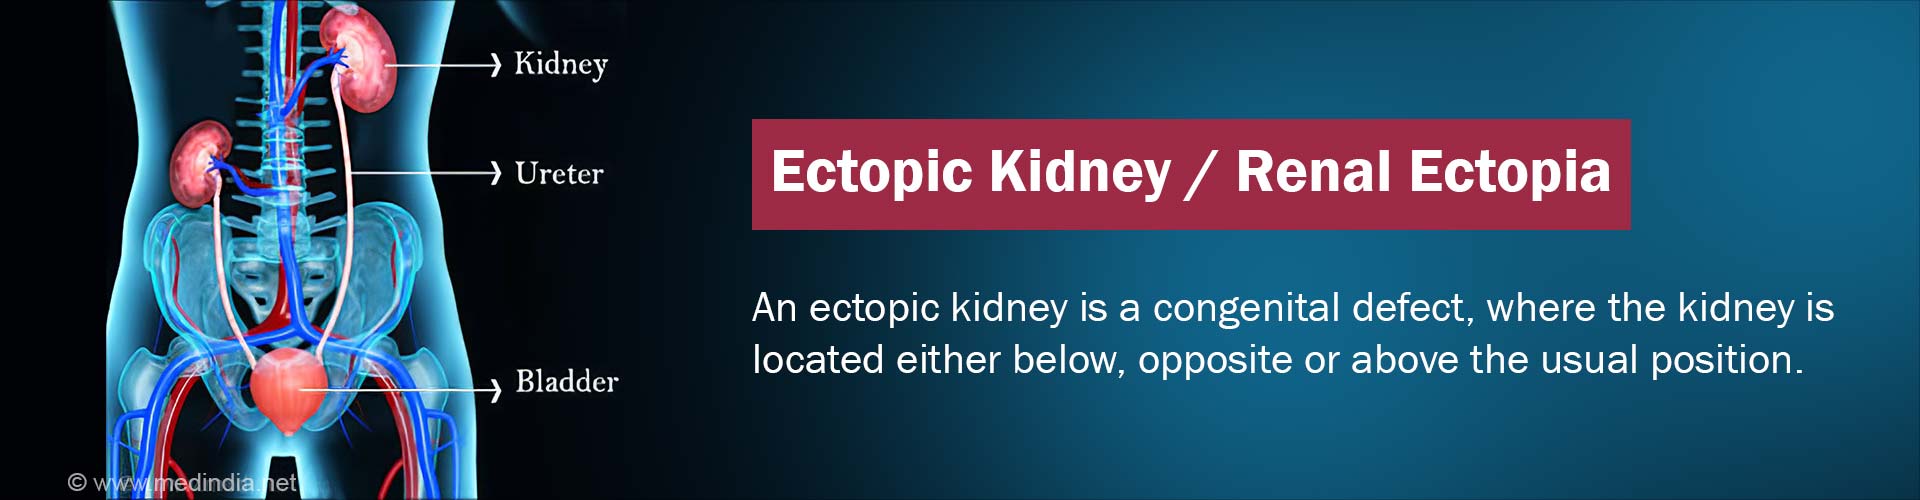 Ectopic Kidney | Renal Ectopia - Causes, Symptoms, Diagnosis, Treatment, Complications